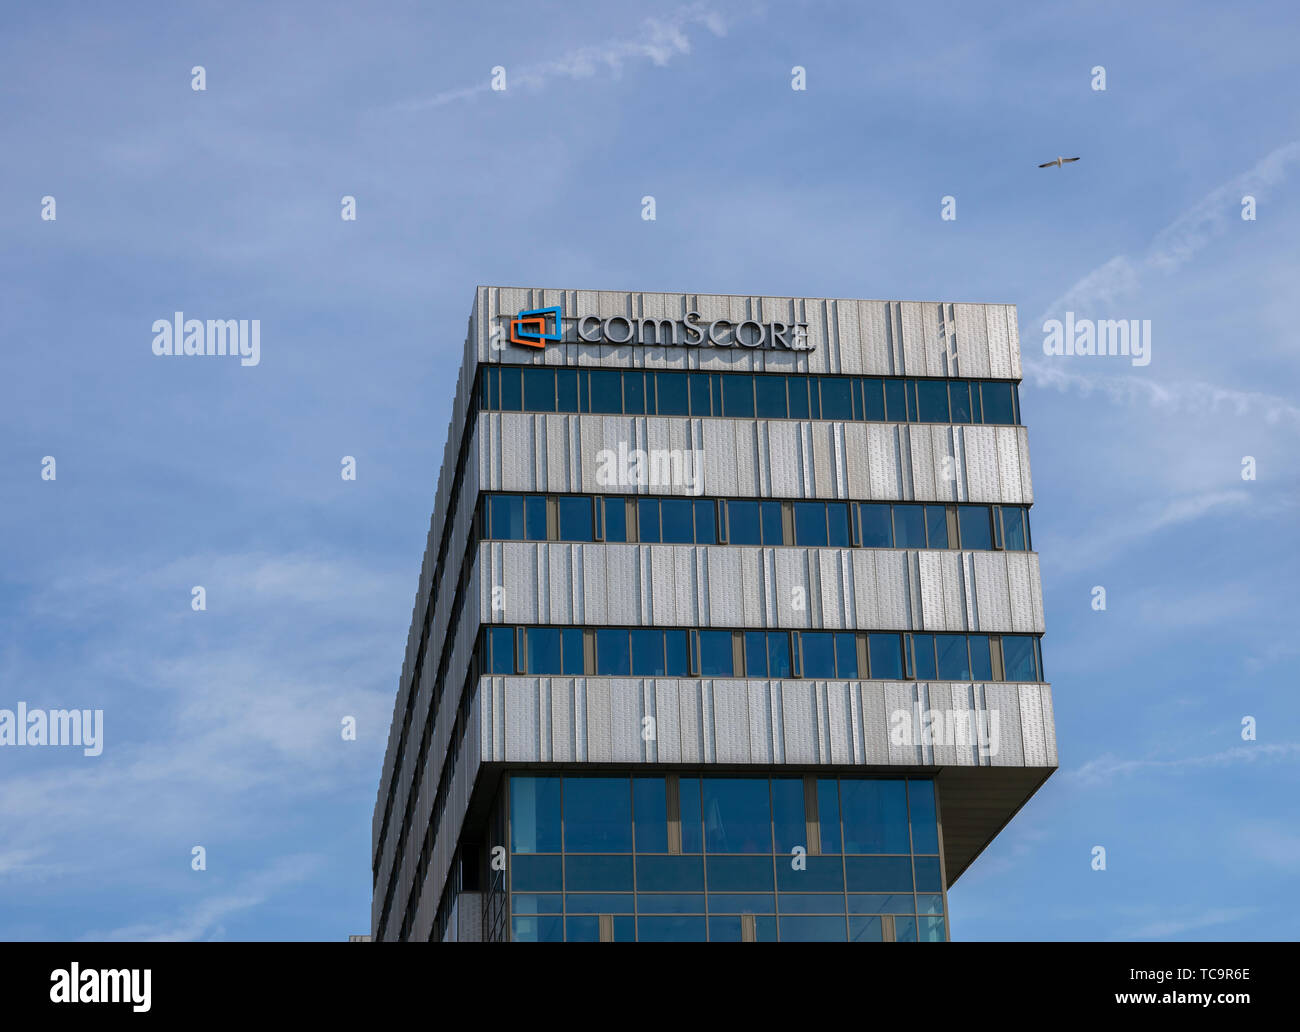 Comscore Building At Amsterdam Bijlmer The Netherlands 2019 Stock Photo